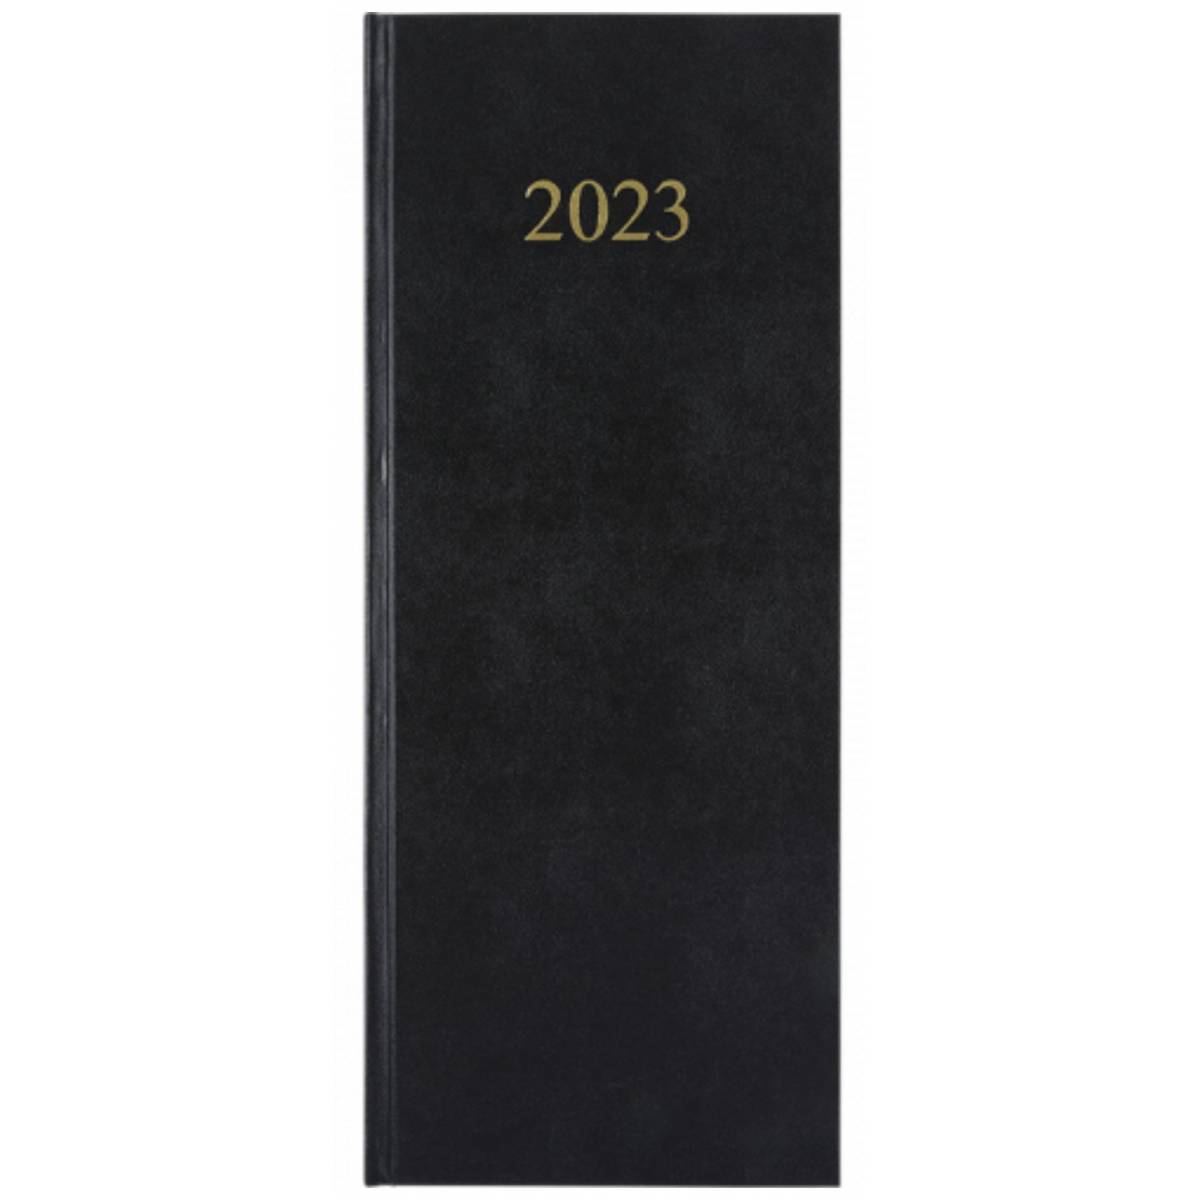 Agenda OBERTHUR 2023 PRADO - 2021 - 14x35cm